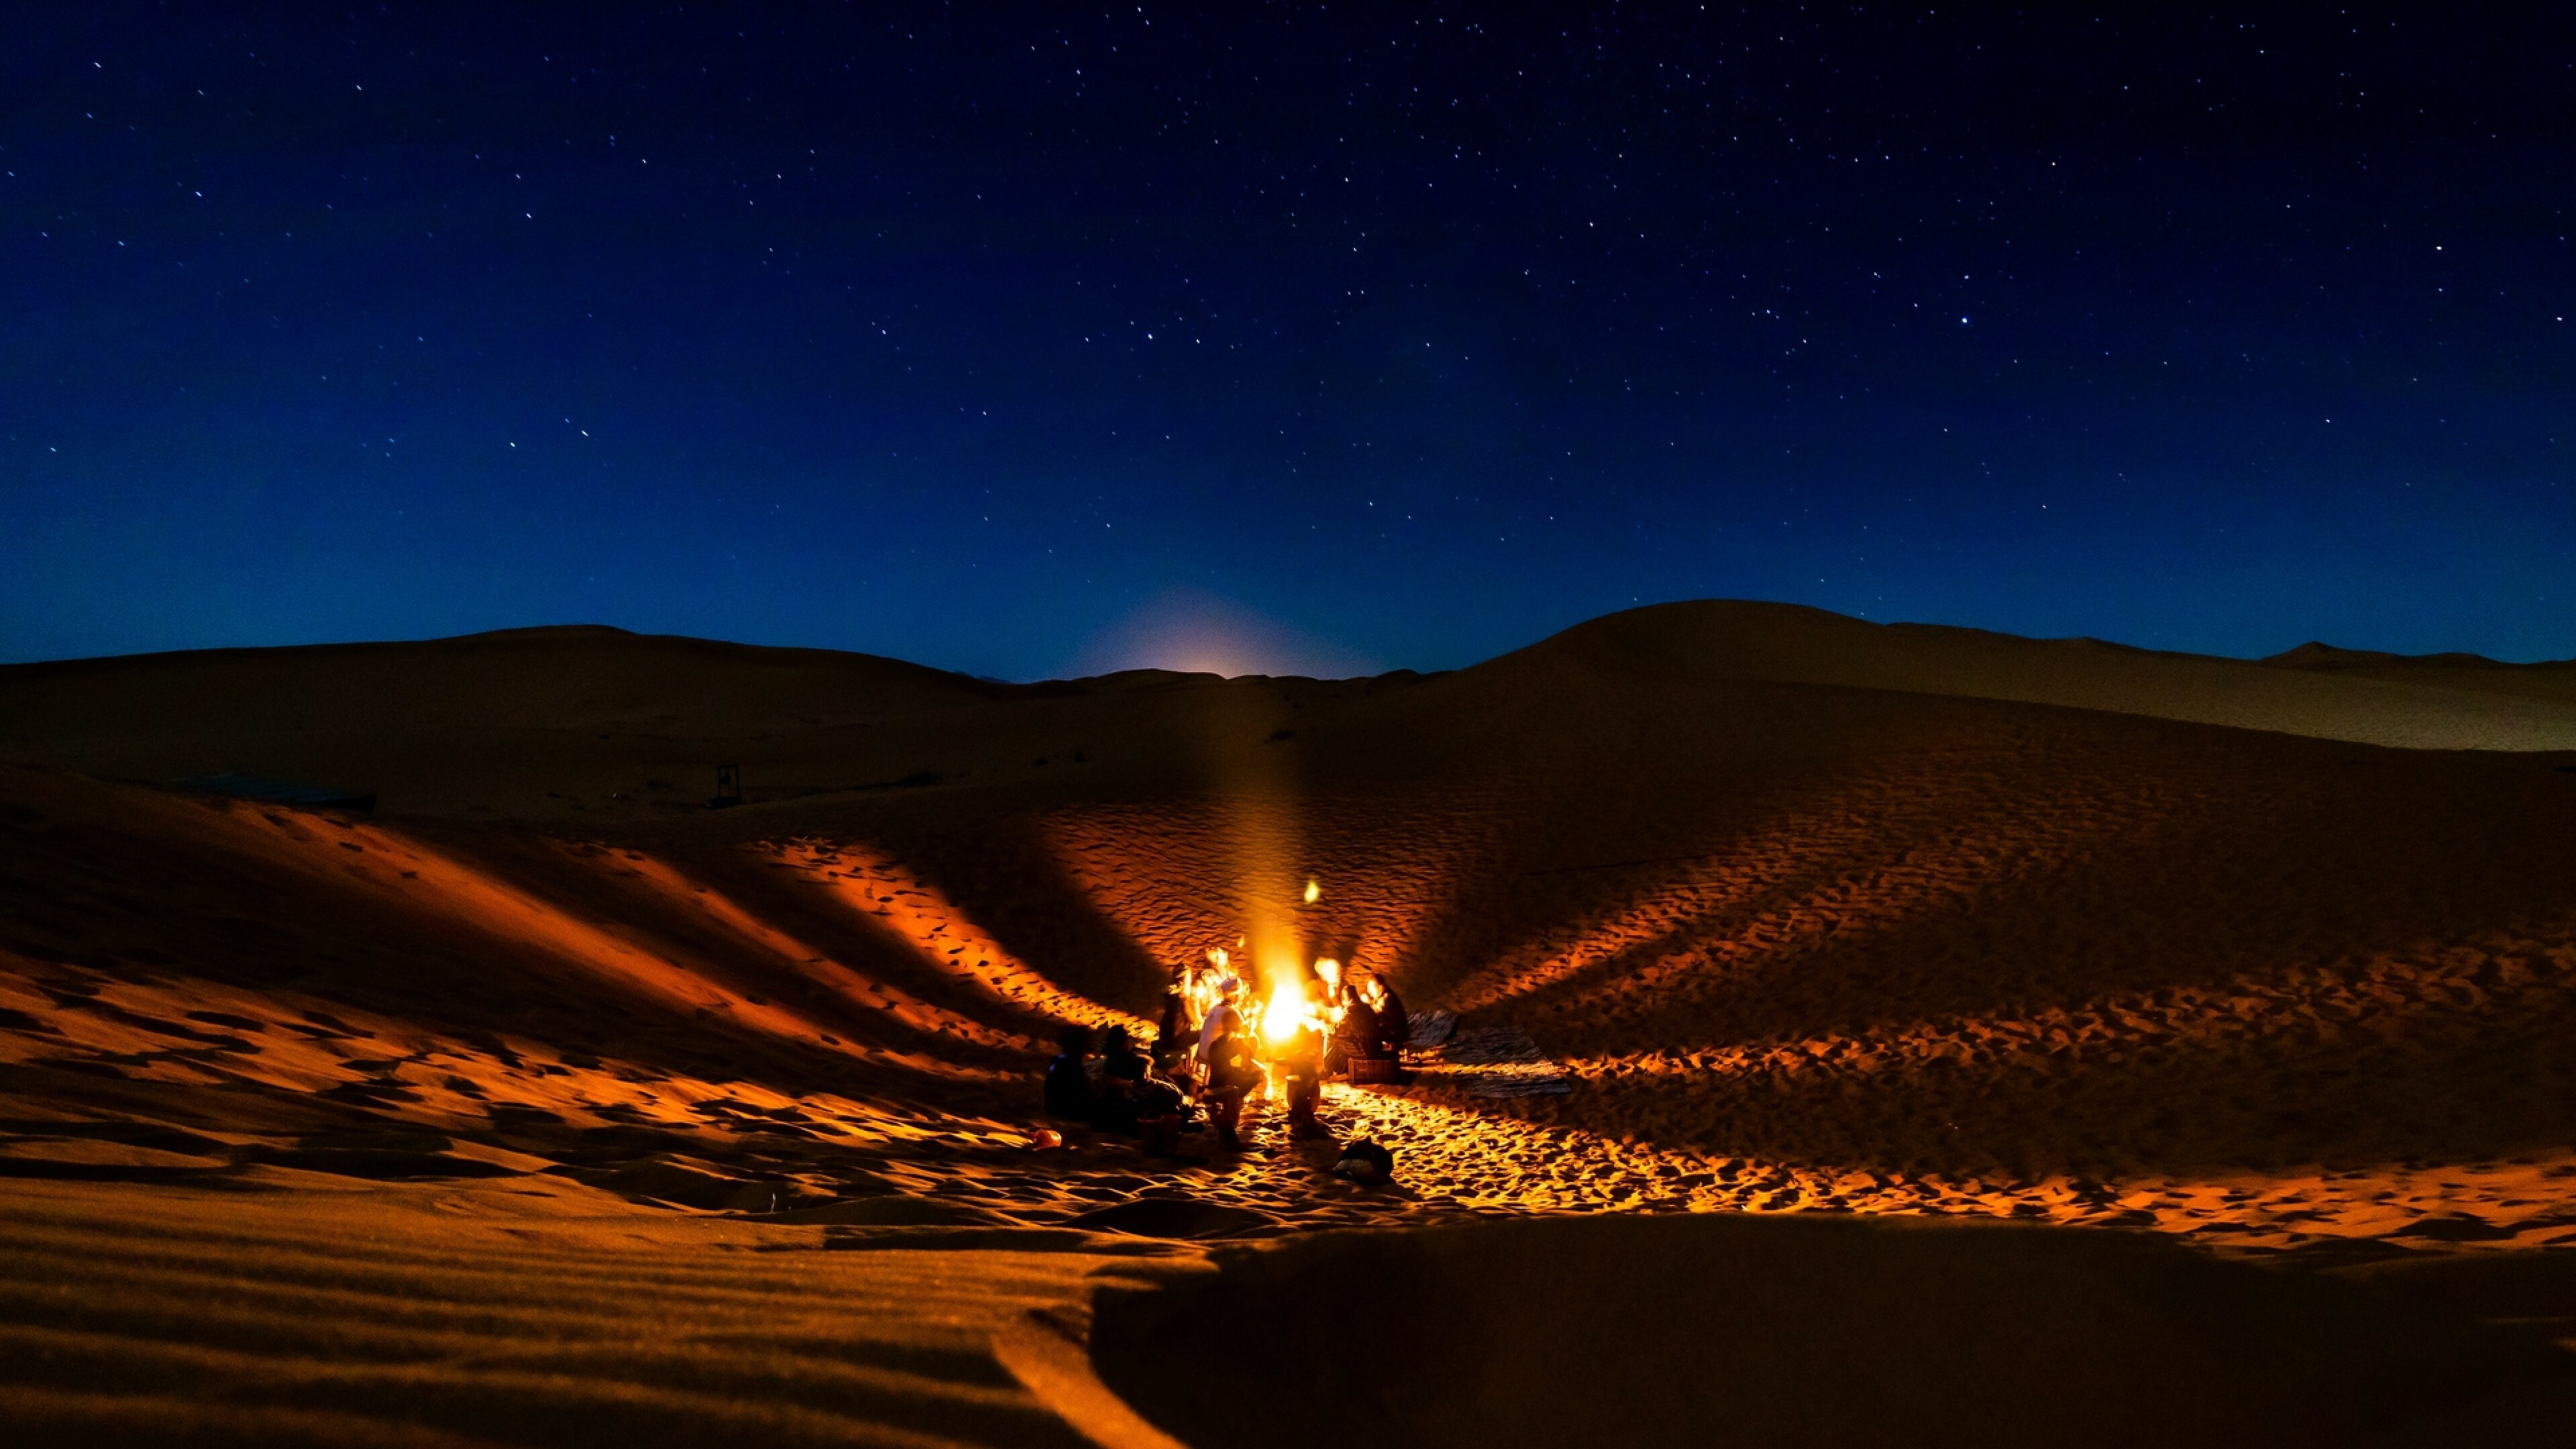 Desert: Morocco, Dunes, Nightscape, Sands. 3840x2160 4K Wallpaper.